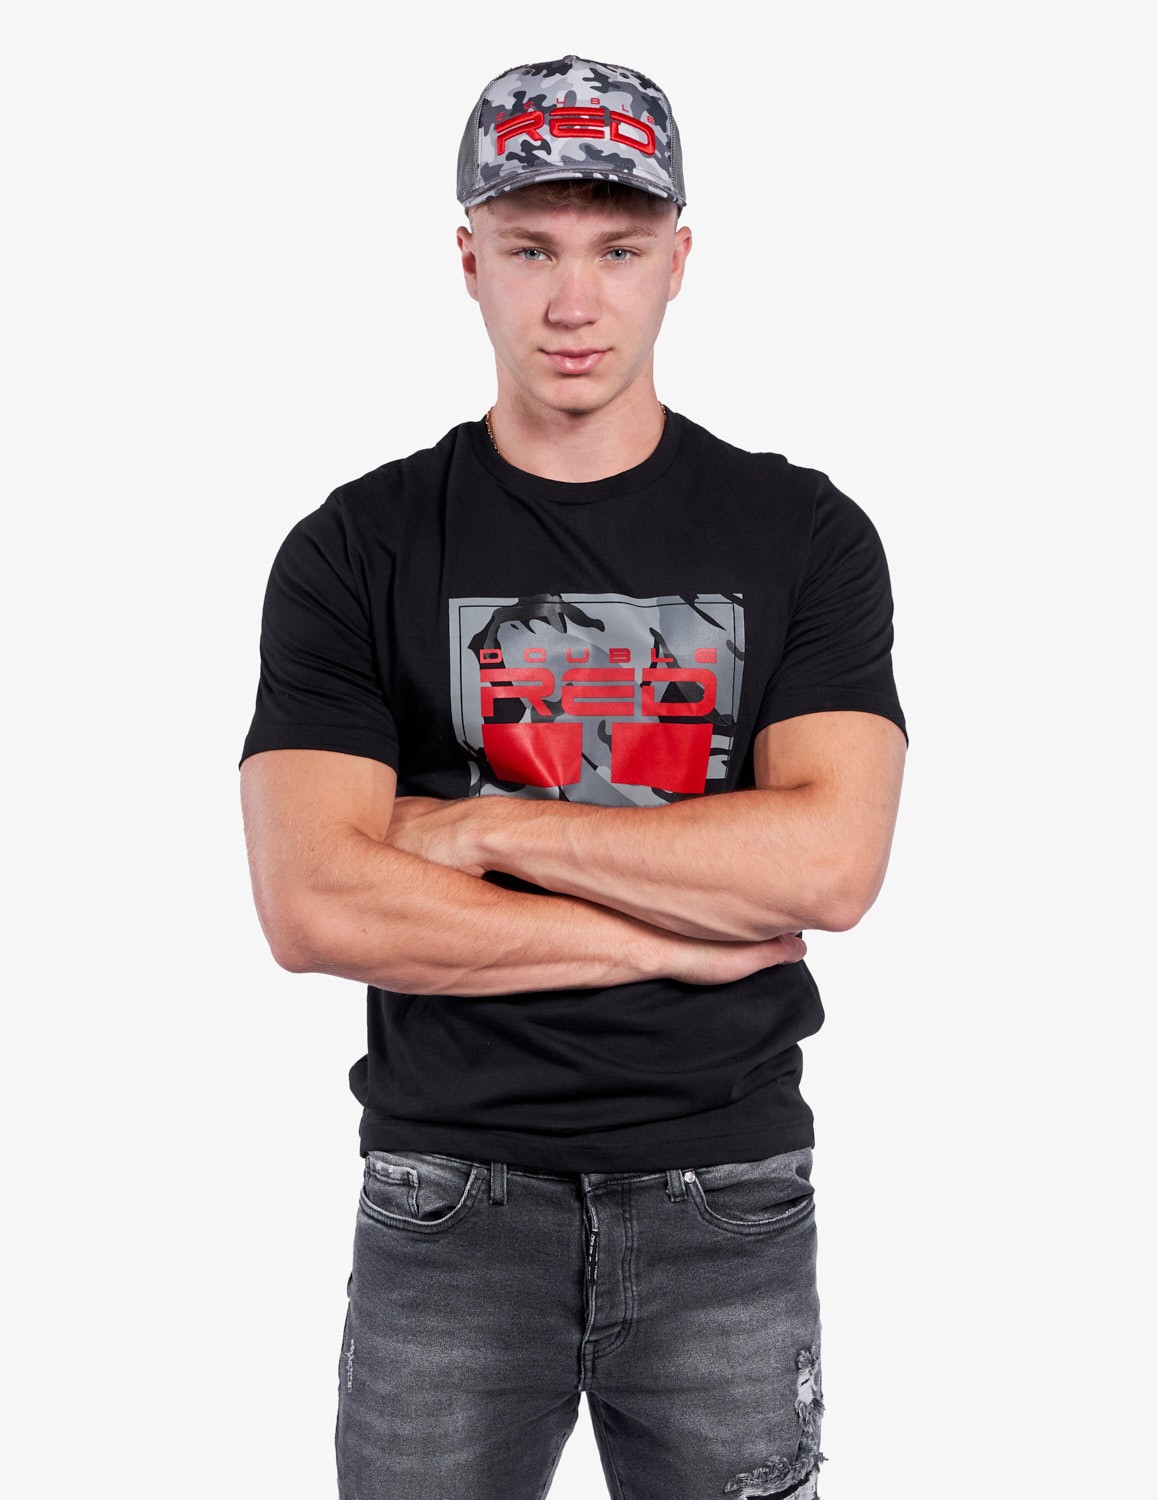 T-shirt CAMODRESSCODE™ Black/Red